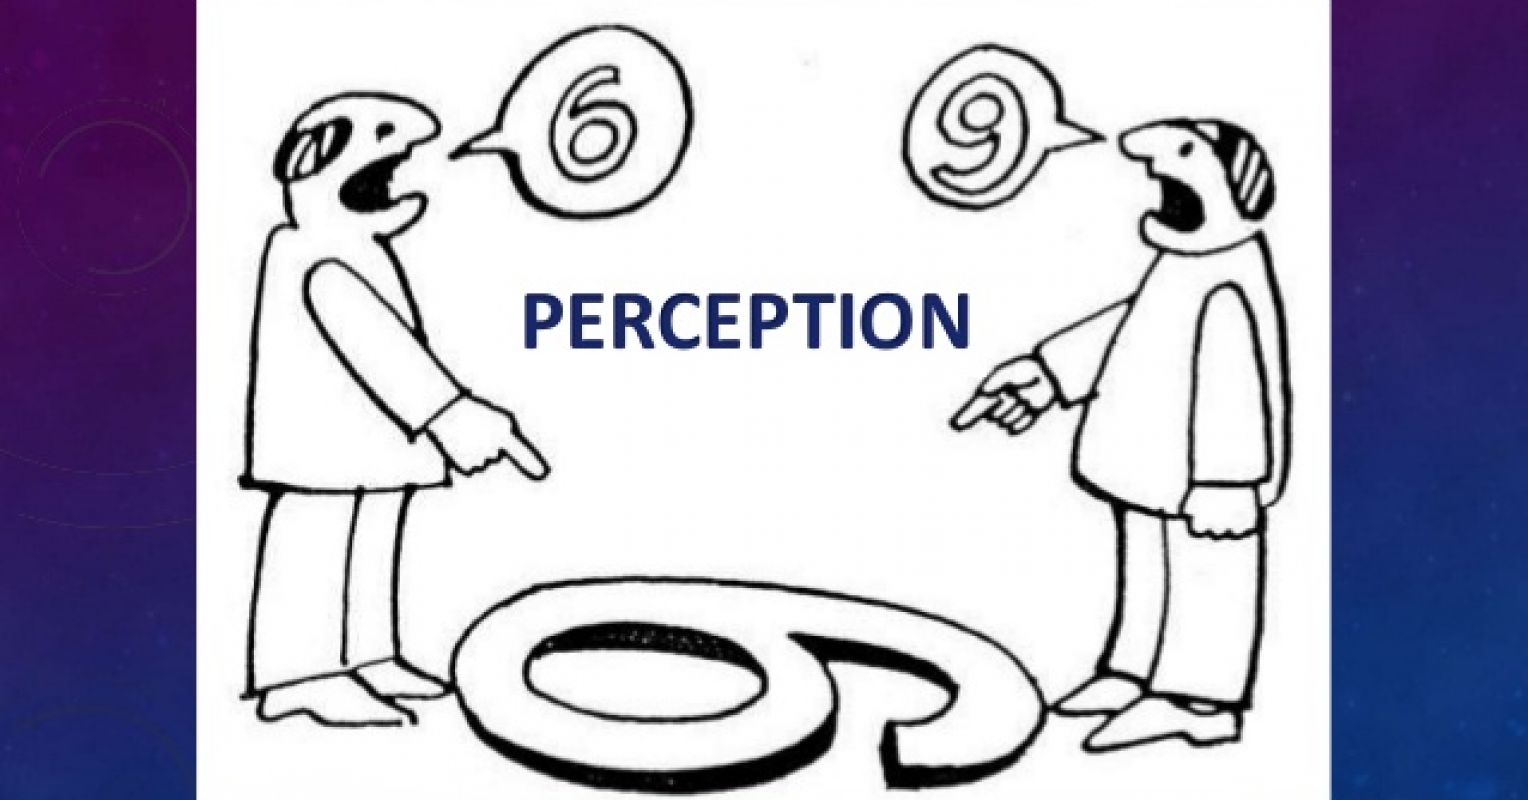 direct perception definition